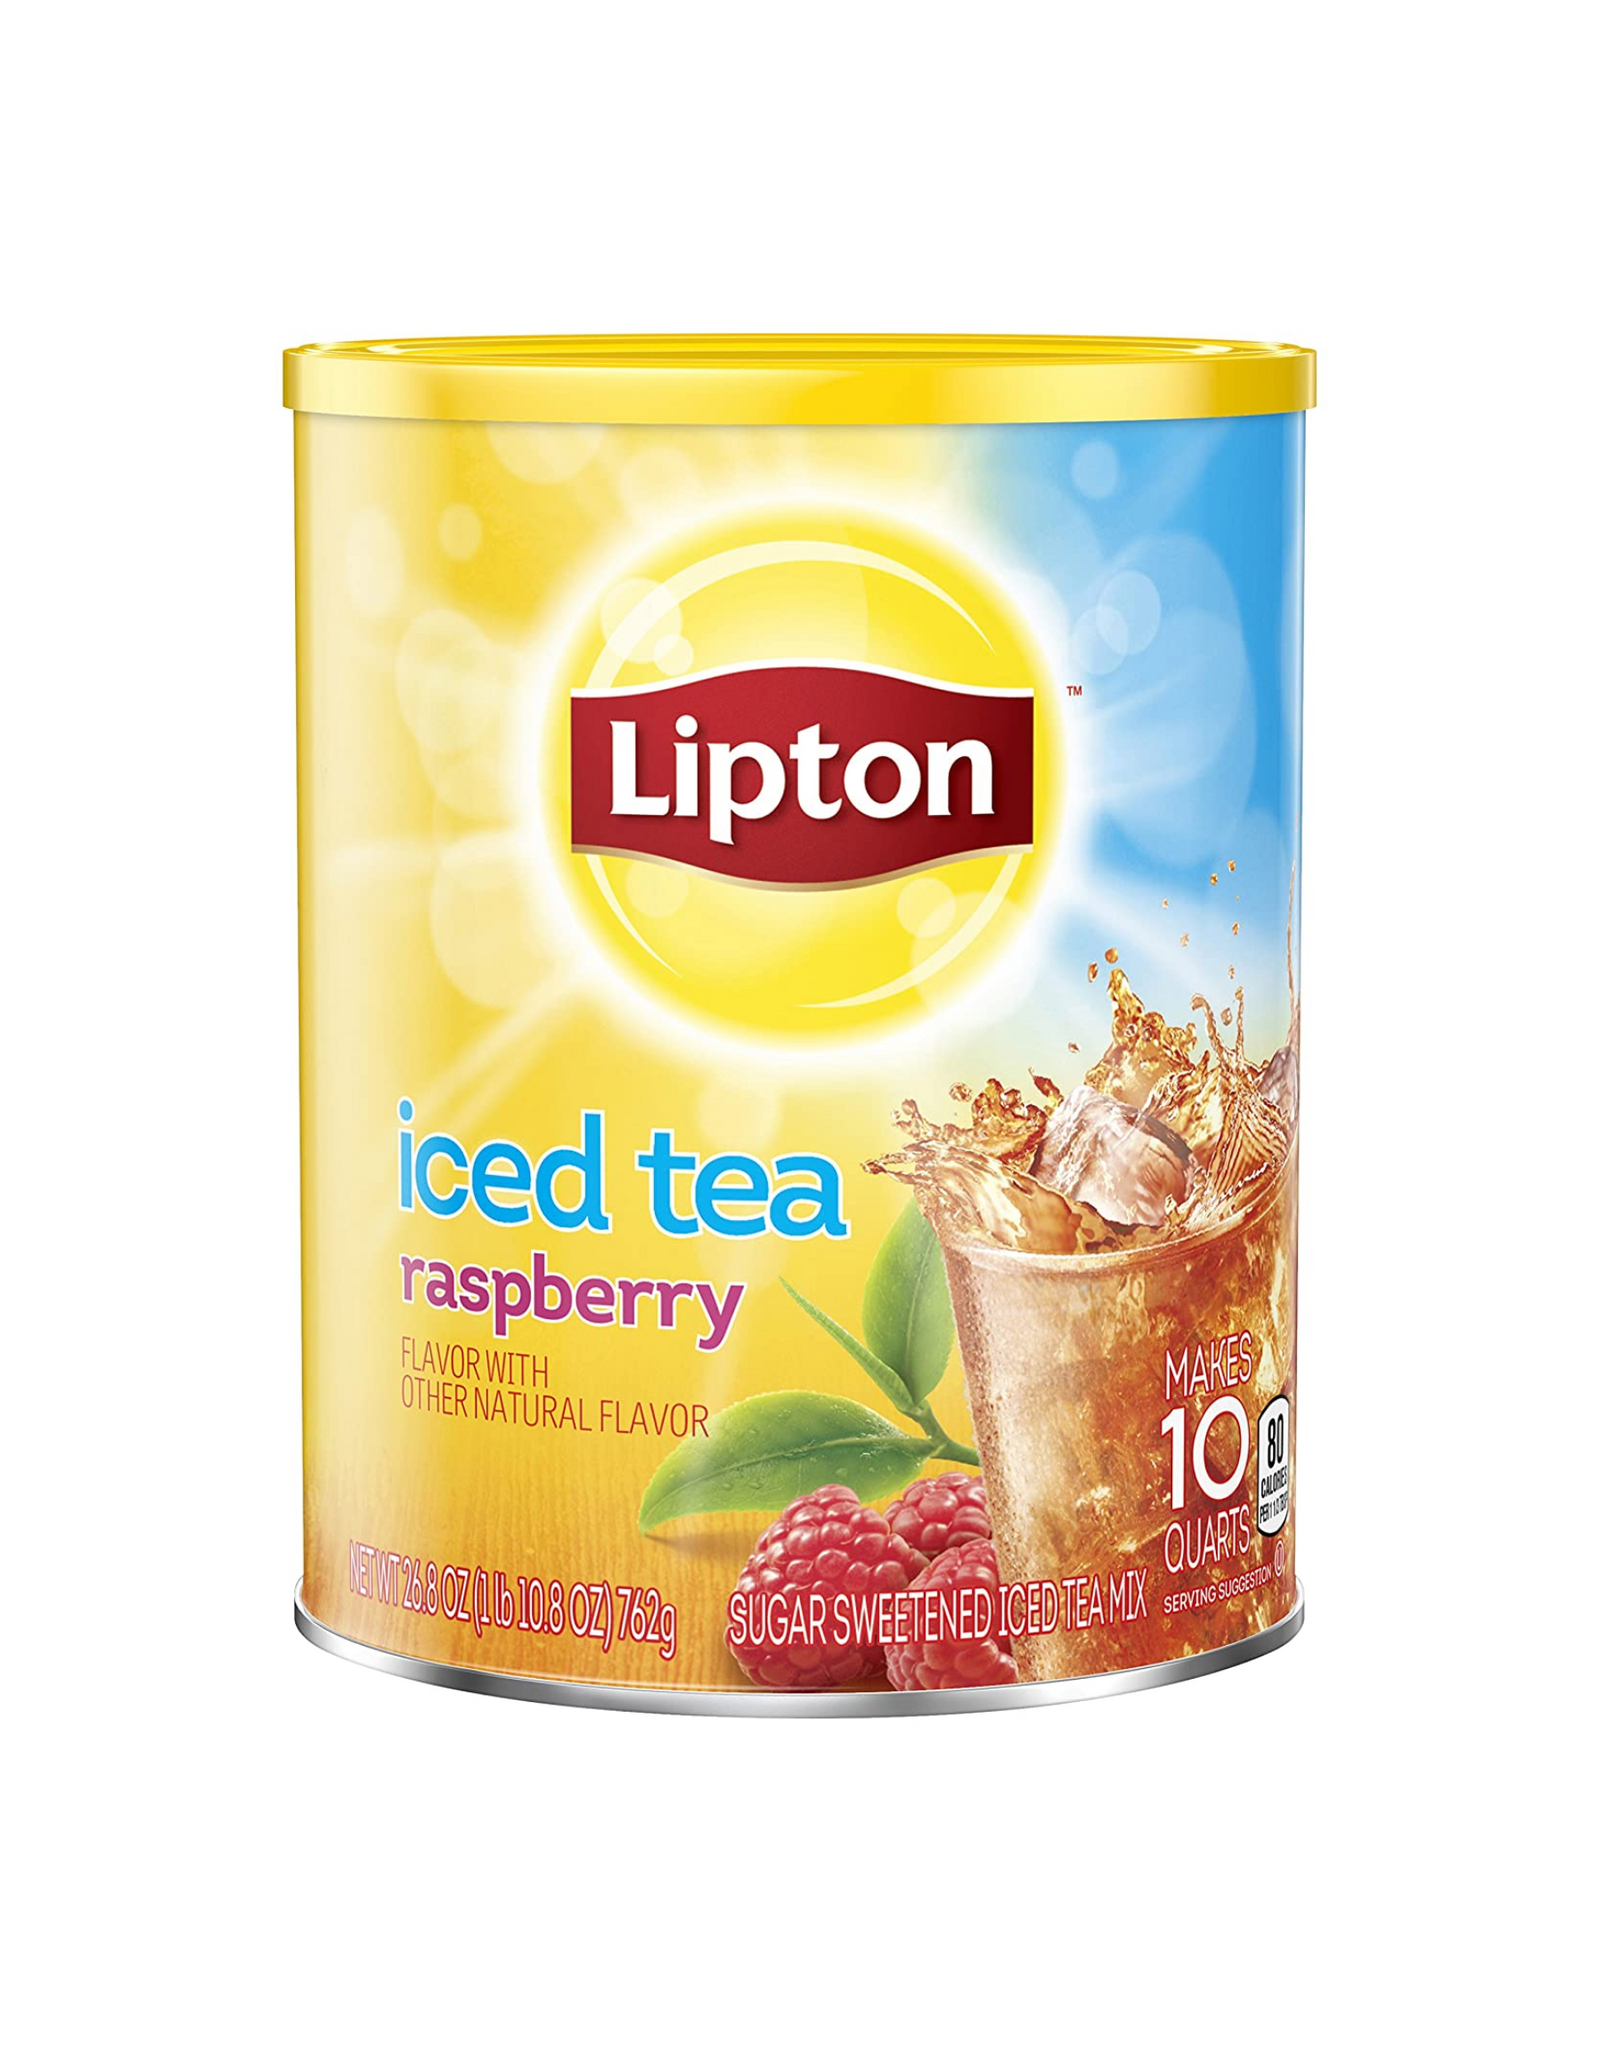 Lipton Iced Tea Mix, Iced Tea Raspberry Flavor, Makes 10 Quarts (Pack of 6)